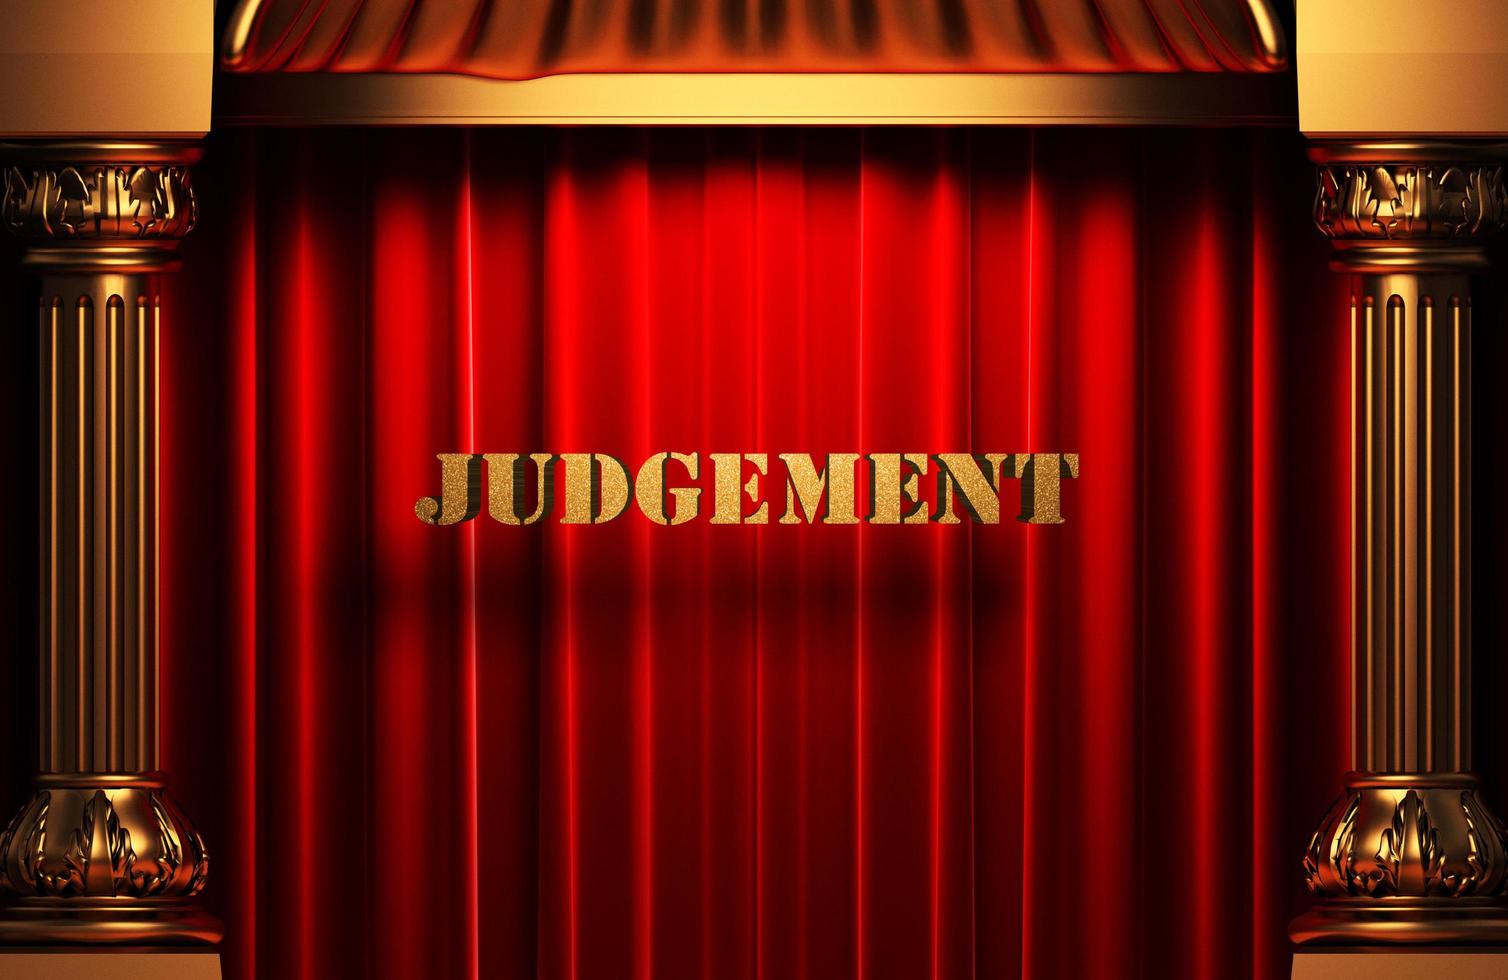 judgement golden word on red curtain photo